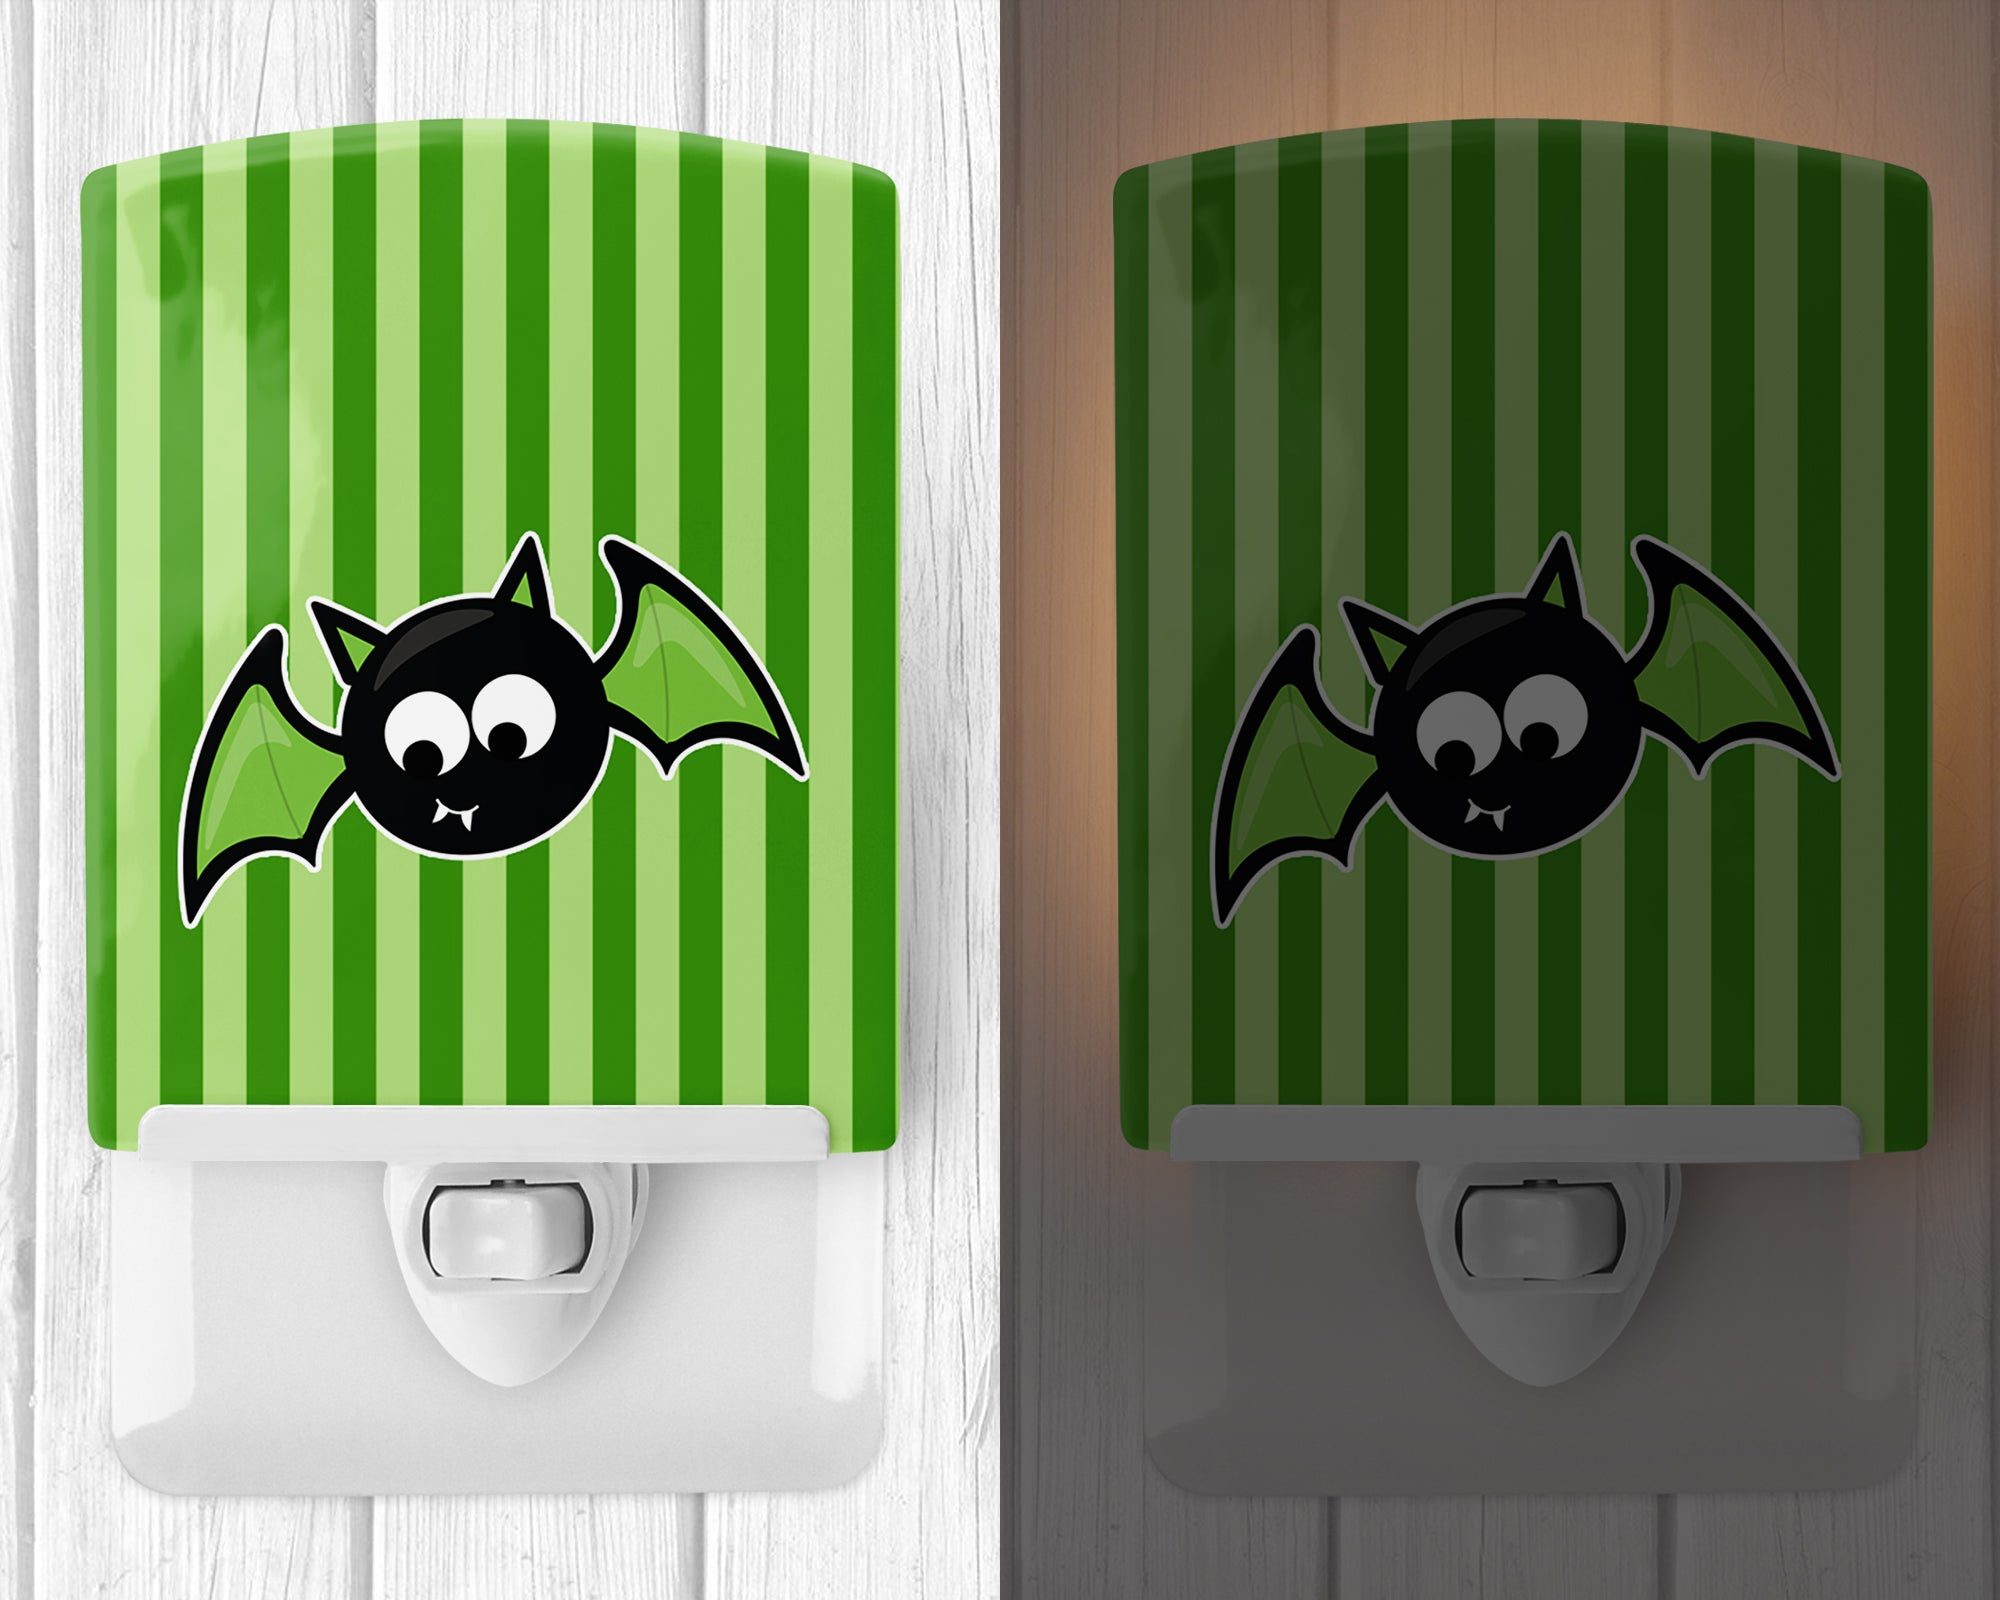 Halloween Bat Green Stripes Ceramic Night Light BB9110CNL - the-store.com